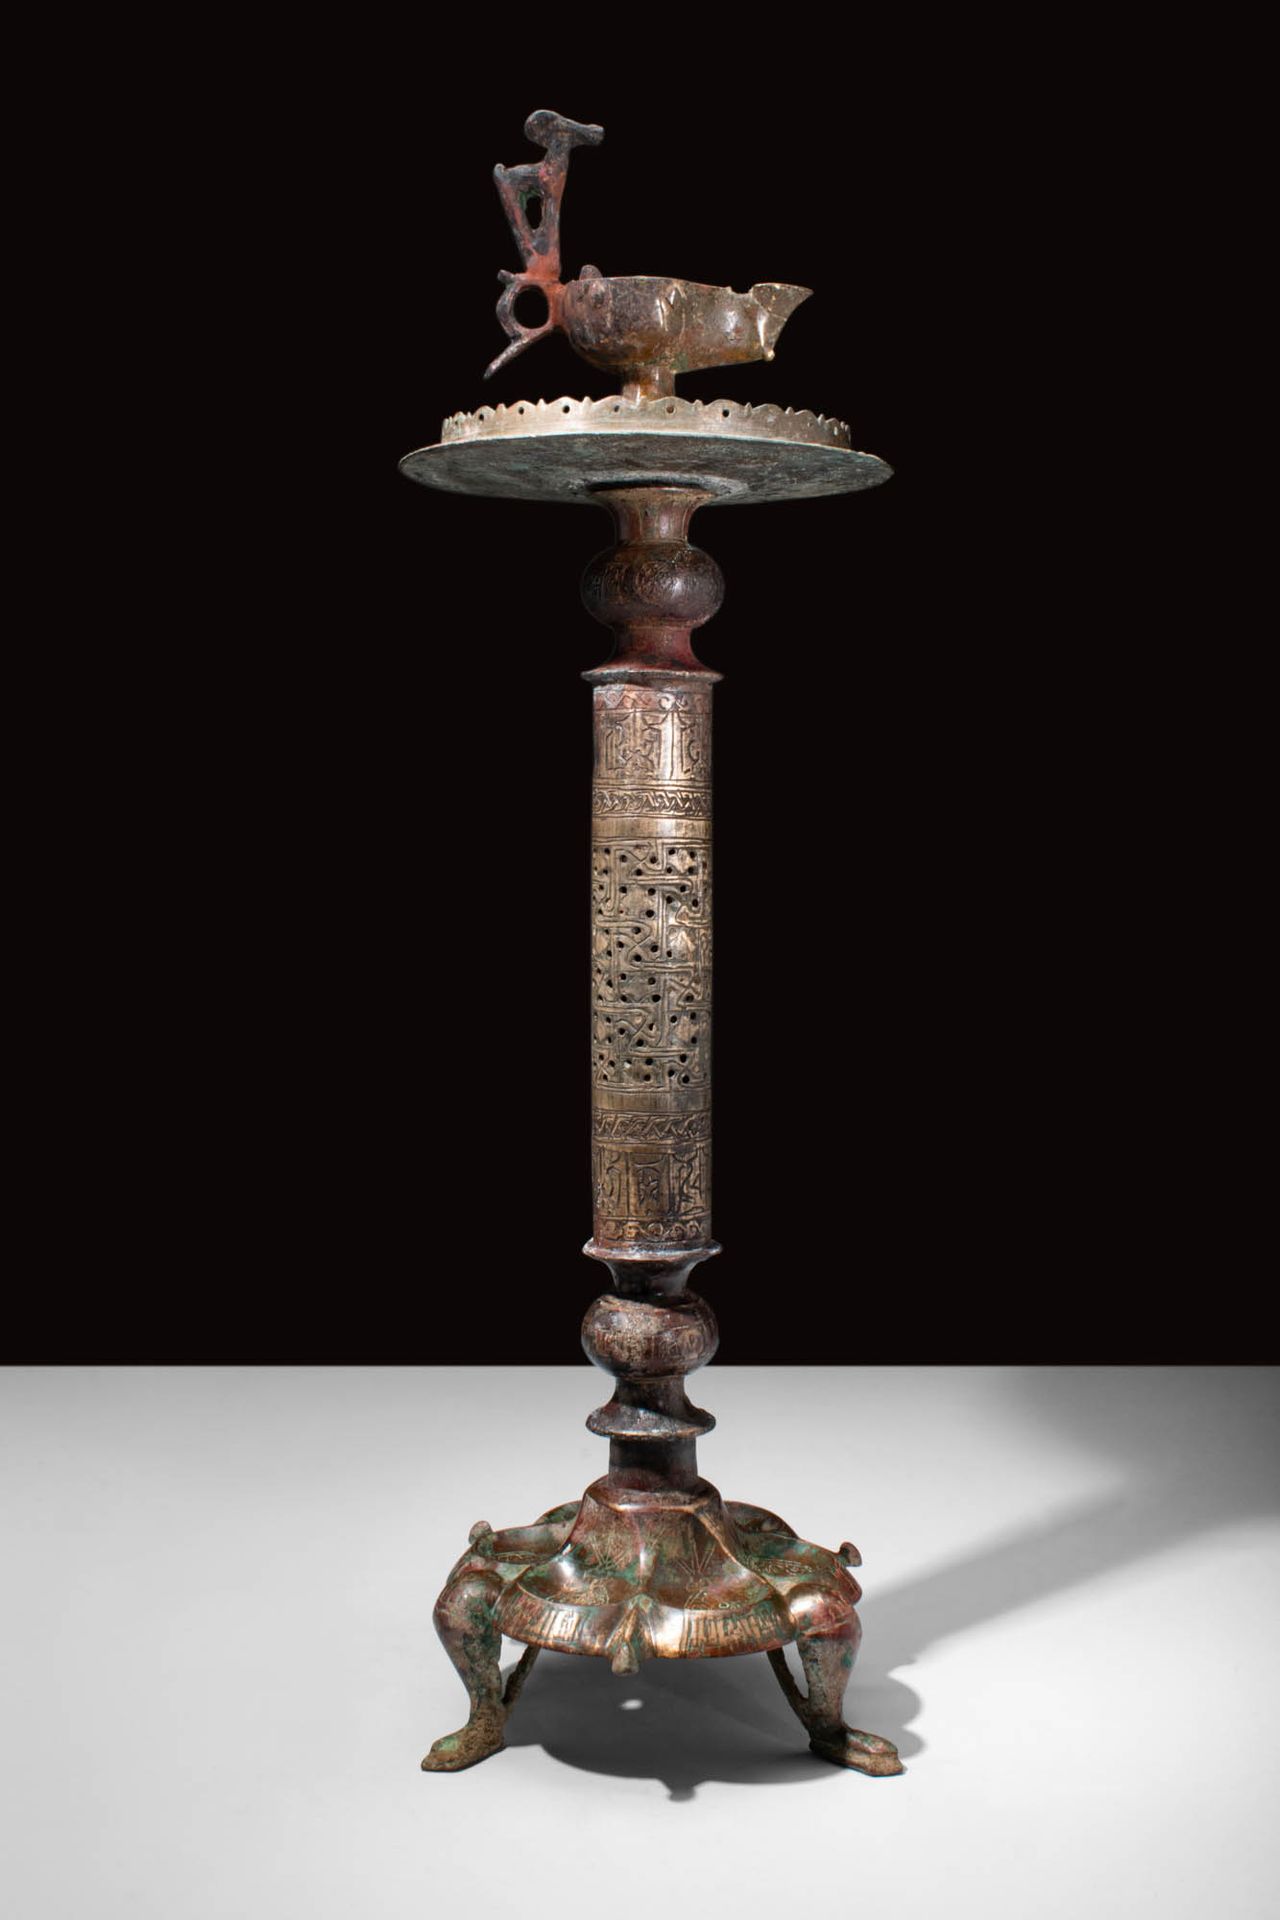 RARE SELJUK BRONZE LAMPSTAND Ca. 900 - 1200 D. C.
Lámpara selyúcida islámica de &hellip;